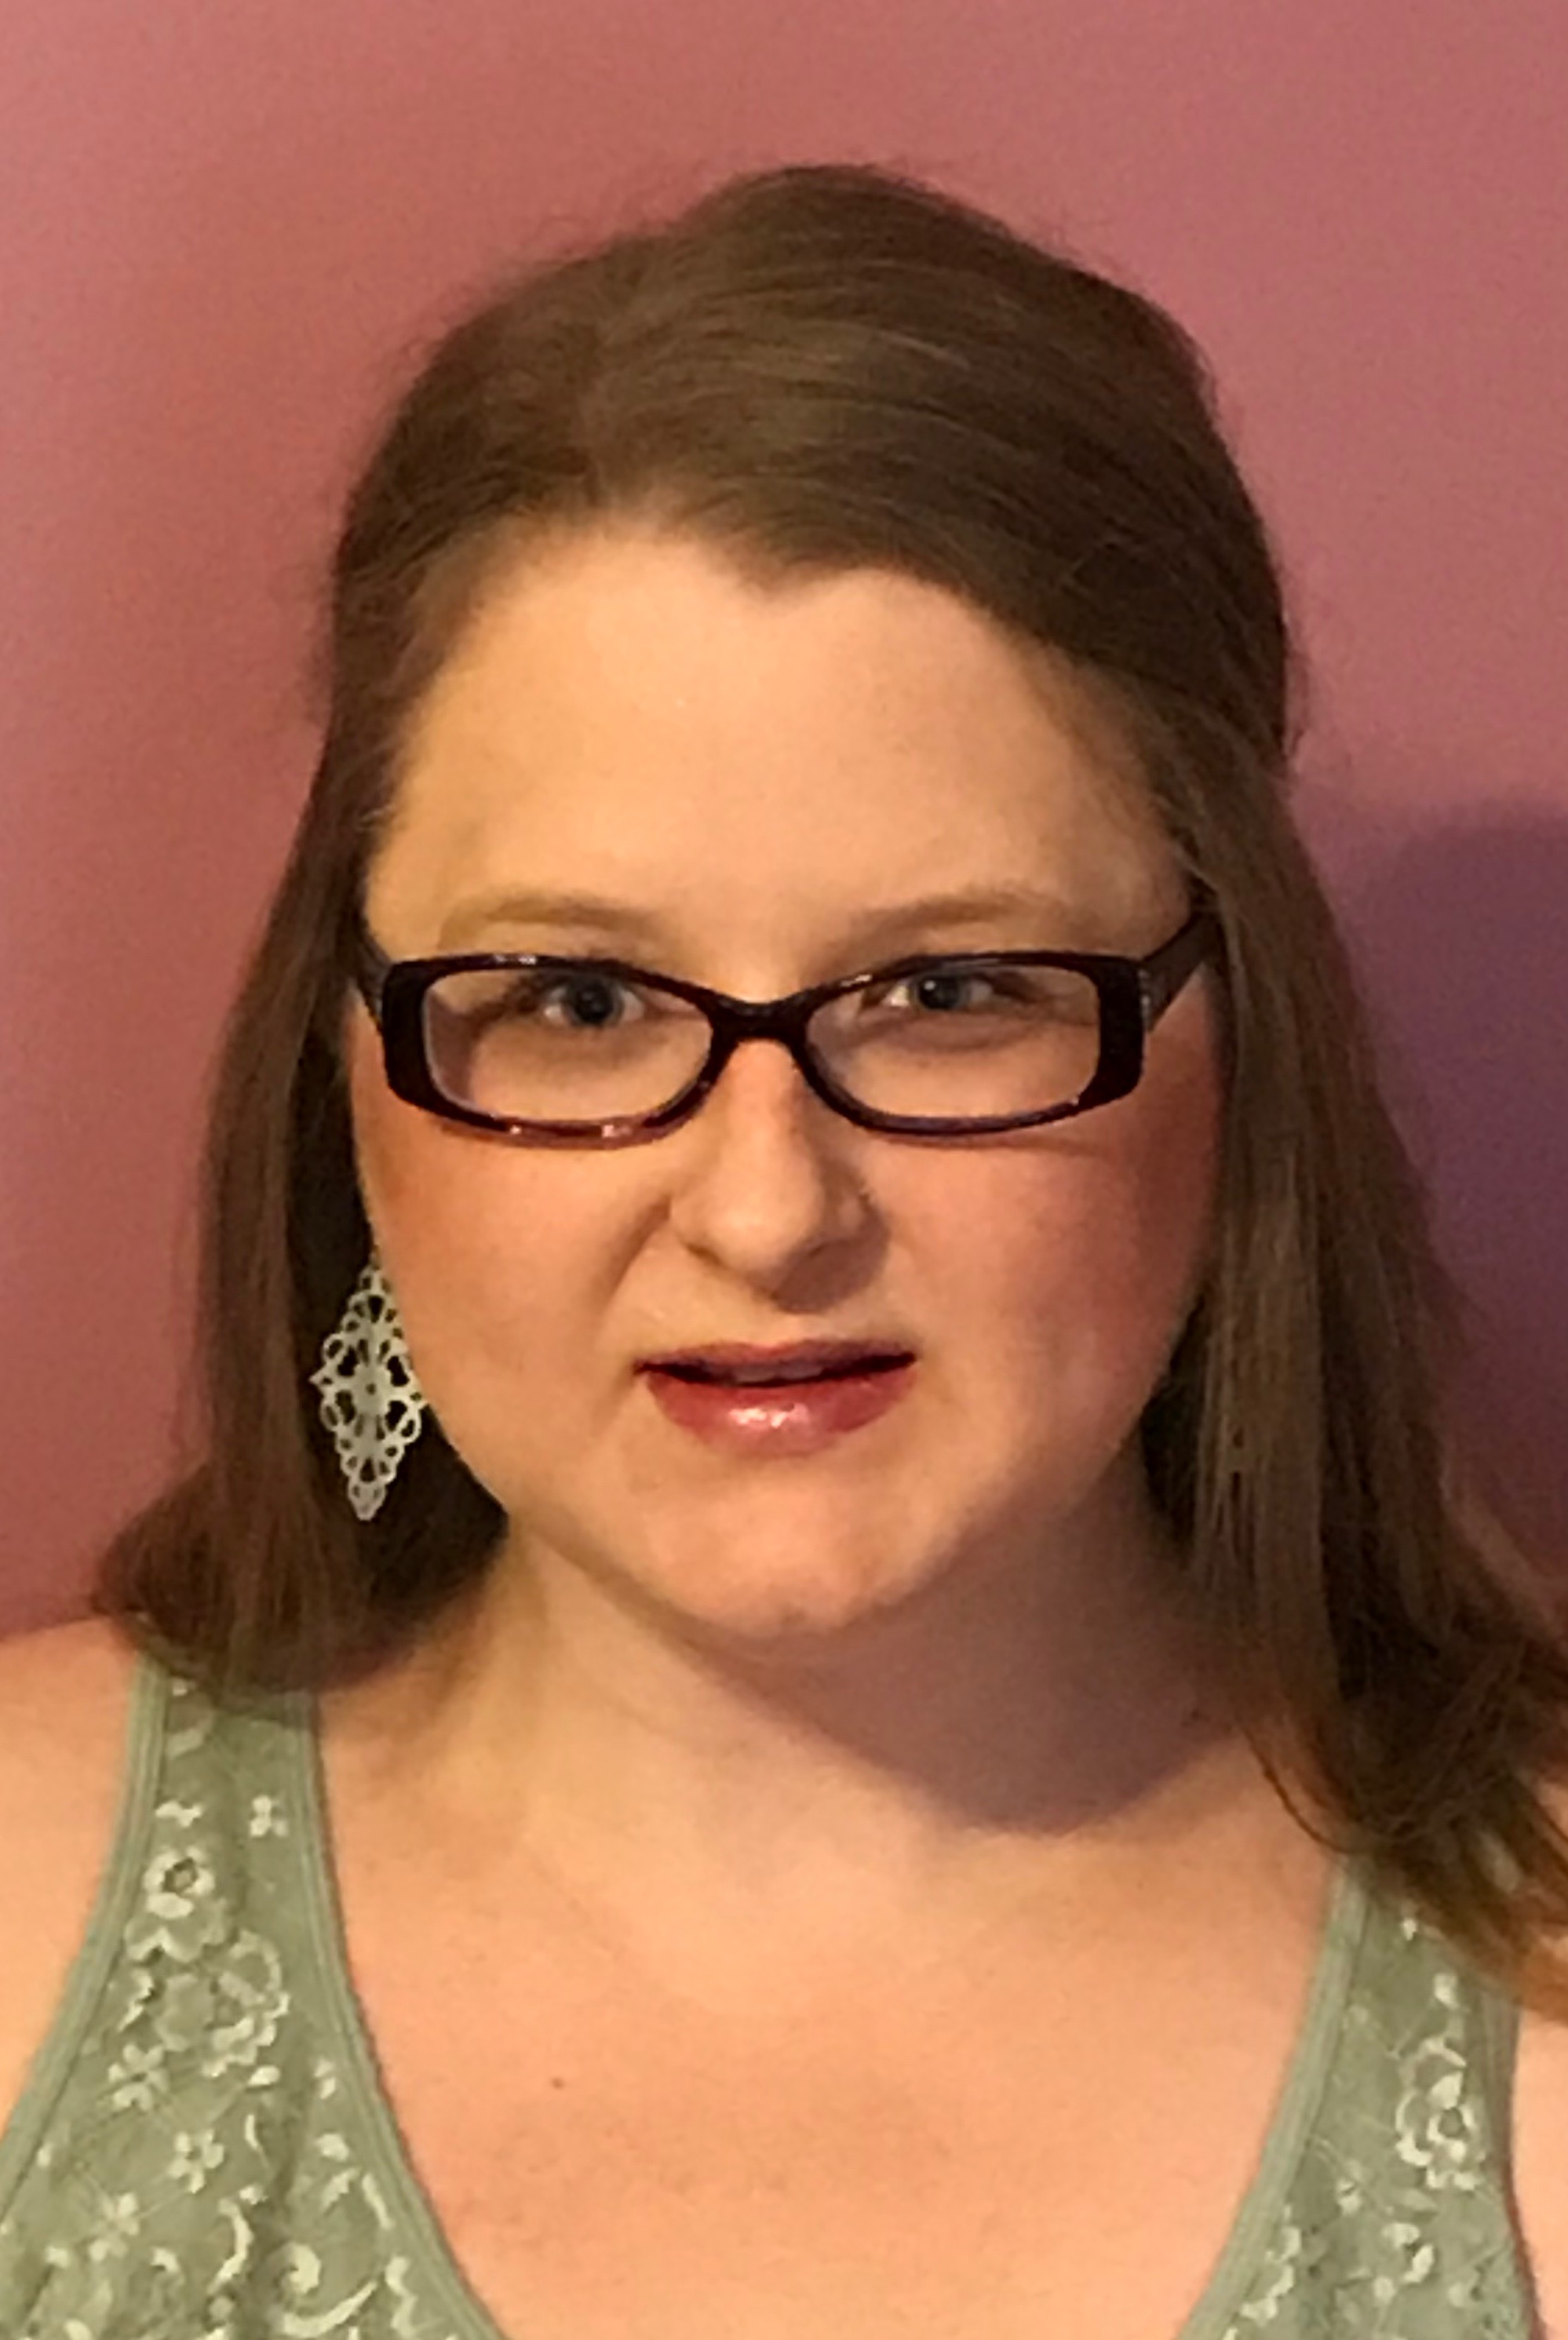 Lupus Community Advocate Amber Blackburn